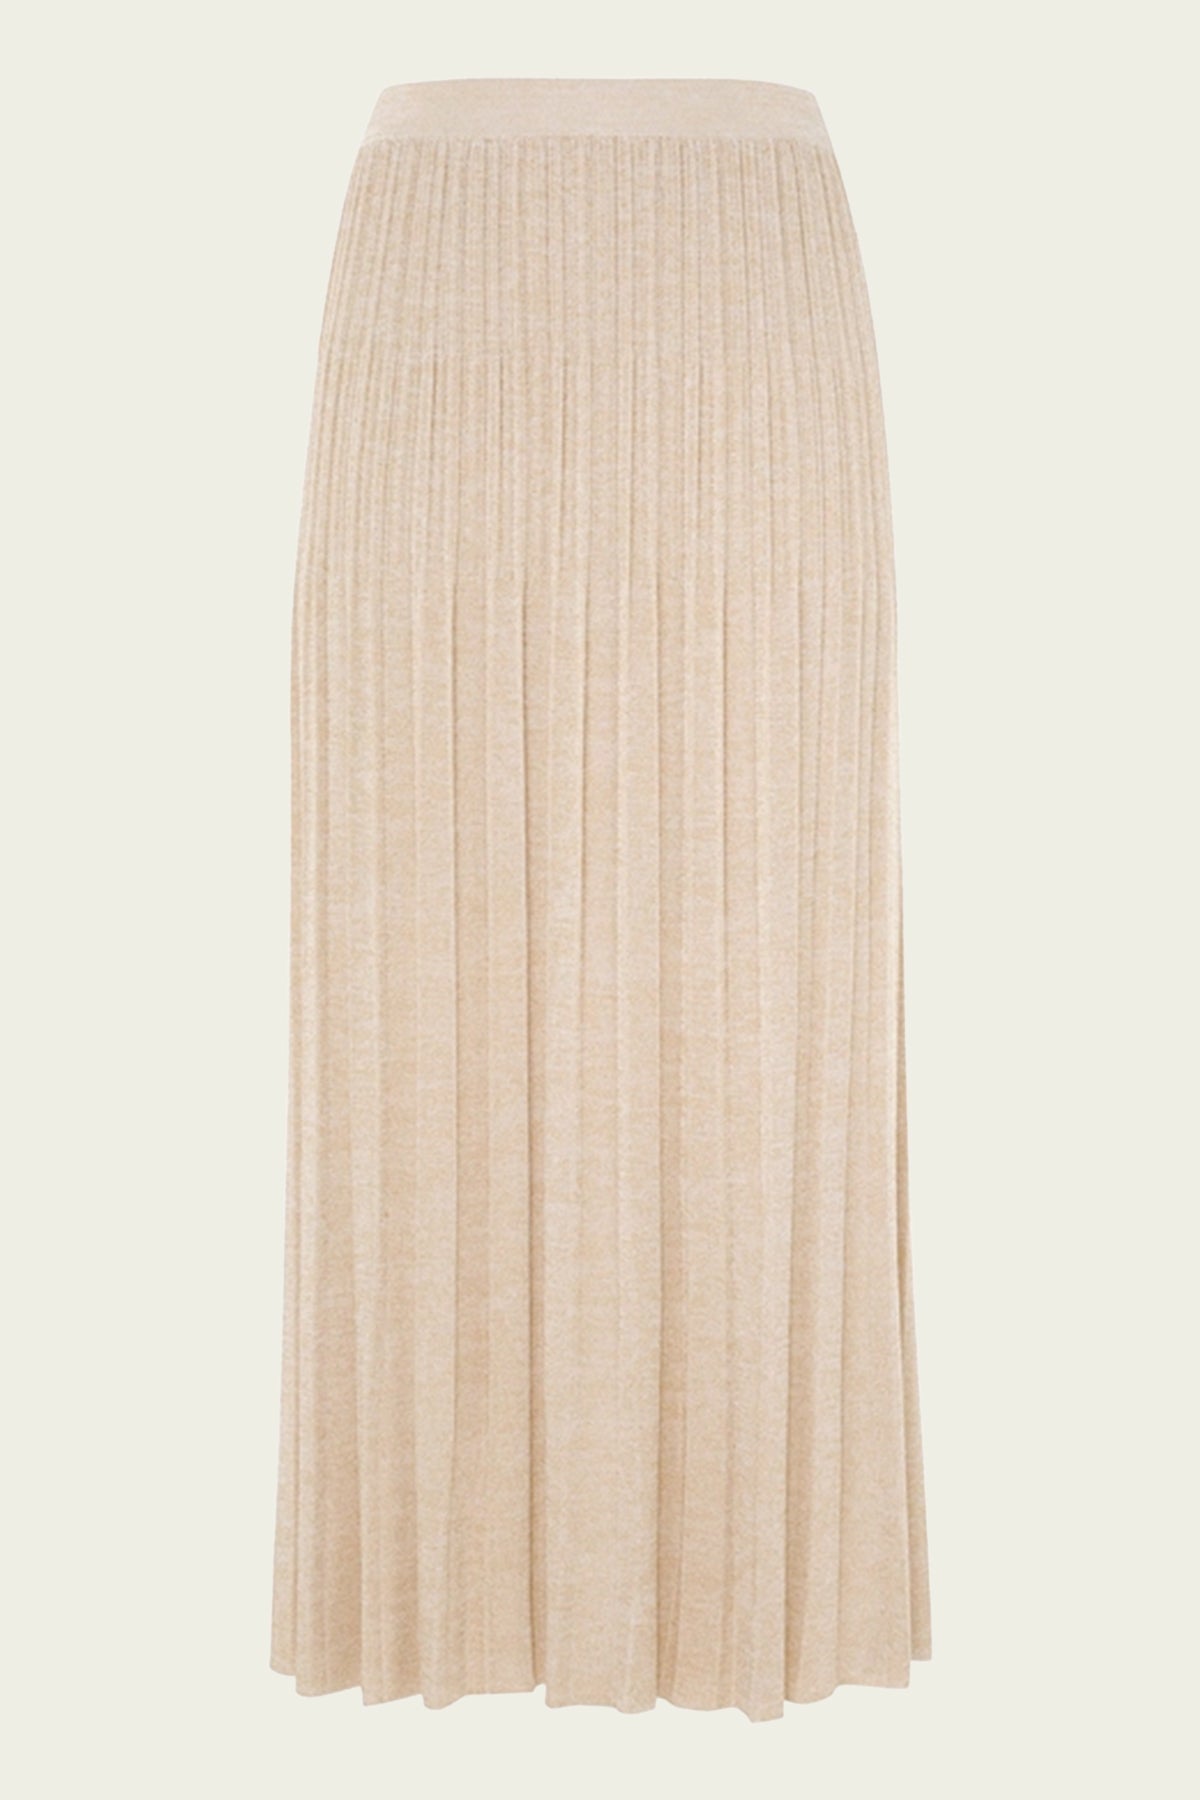 Halliday Rip Midi Skirt in Cream Lurex - shop-olivia.com